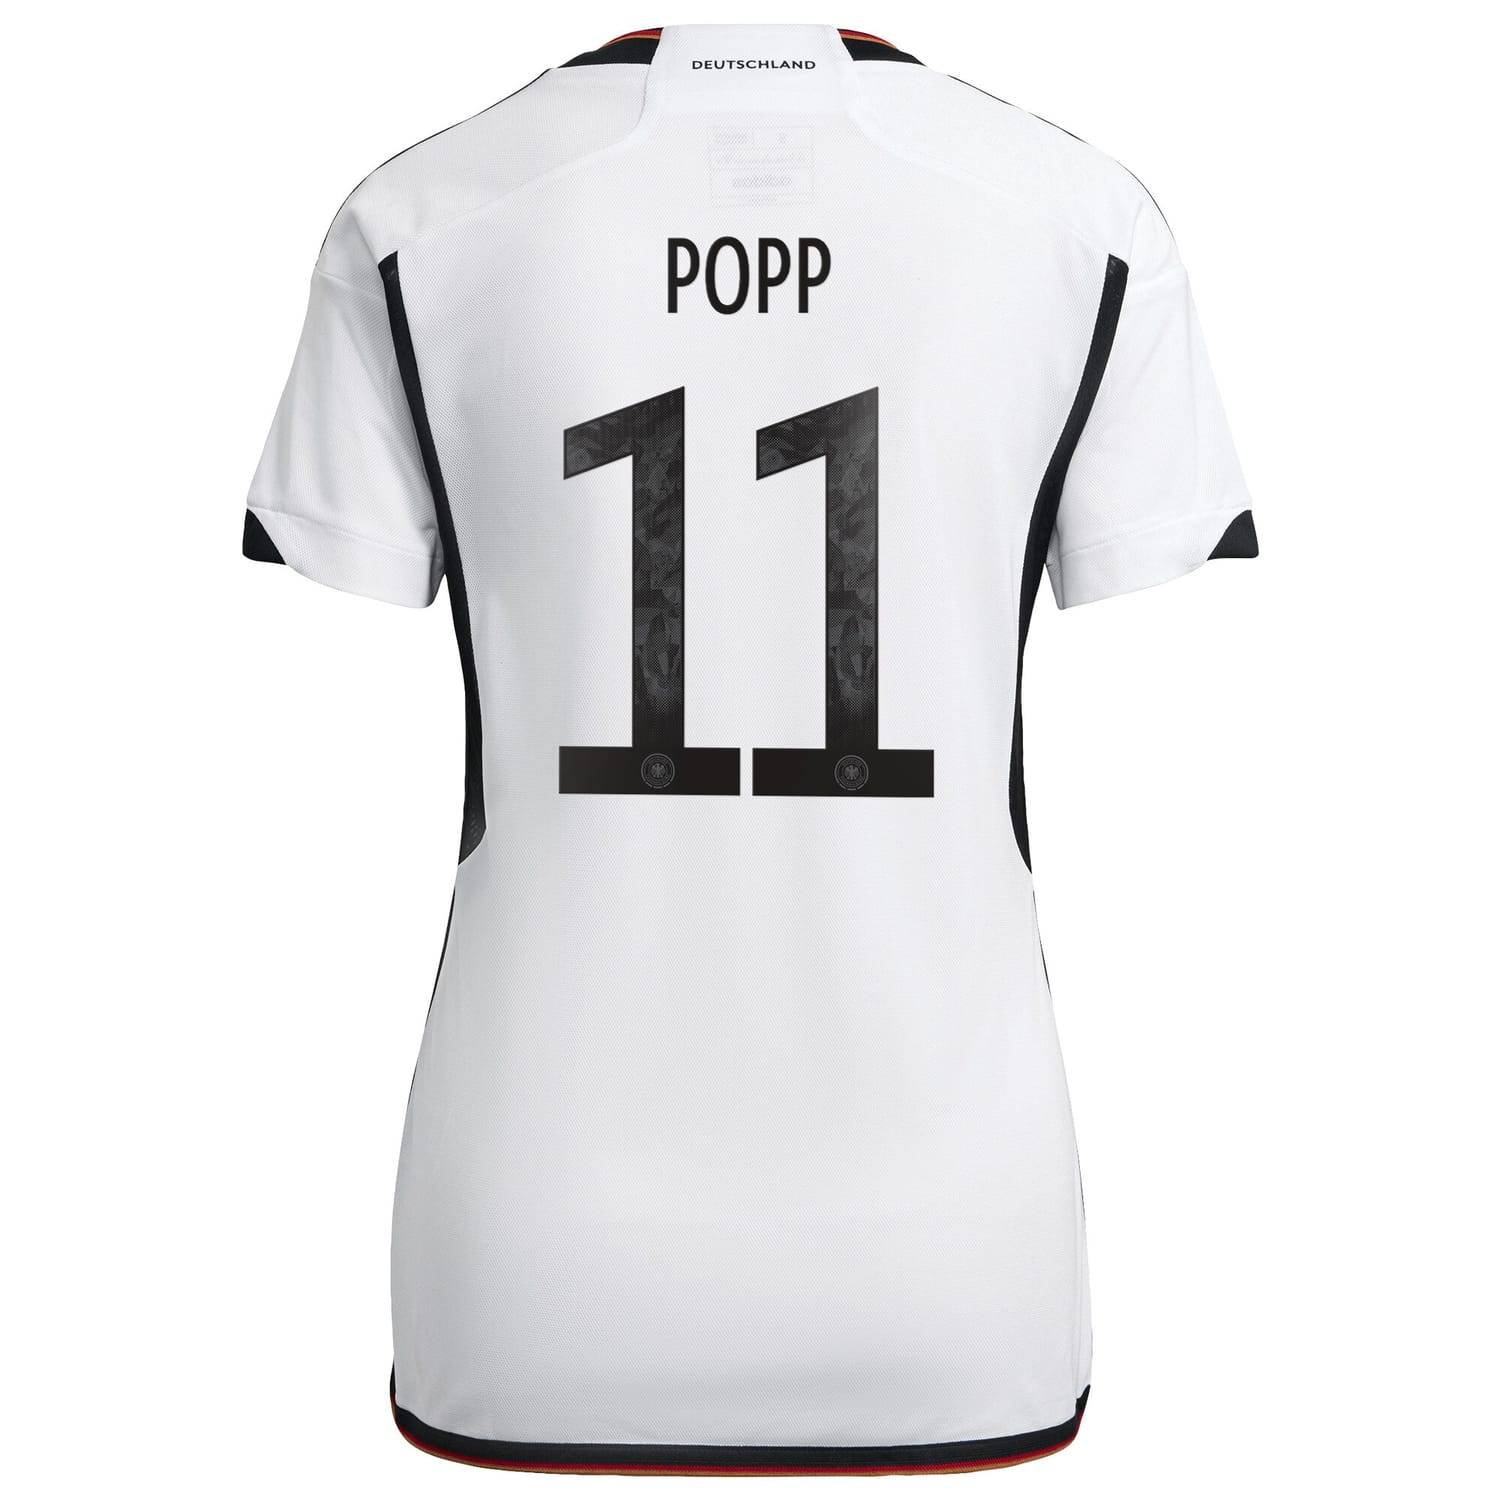 Germany National Team Home Jersey Shirt player Alexandra Popp 11 printing  for Women